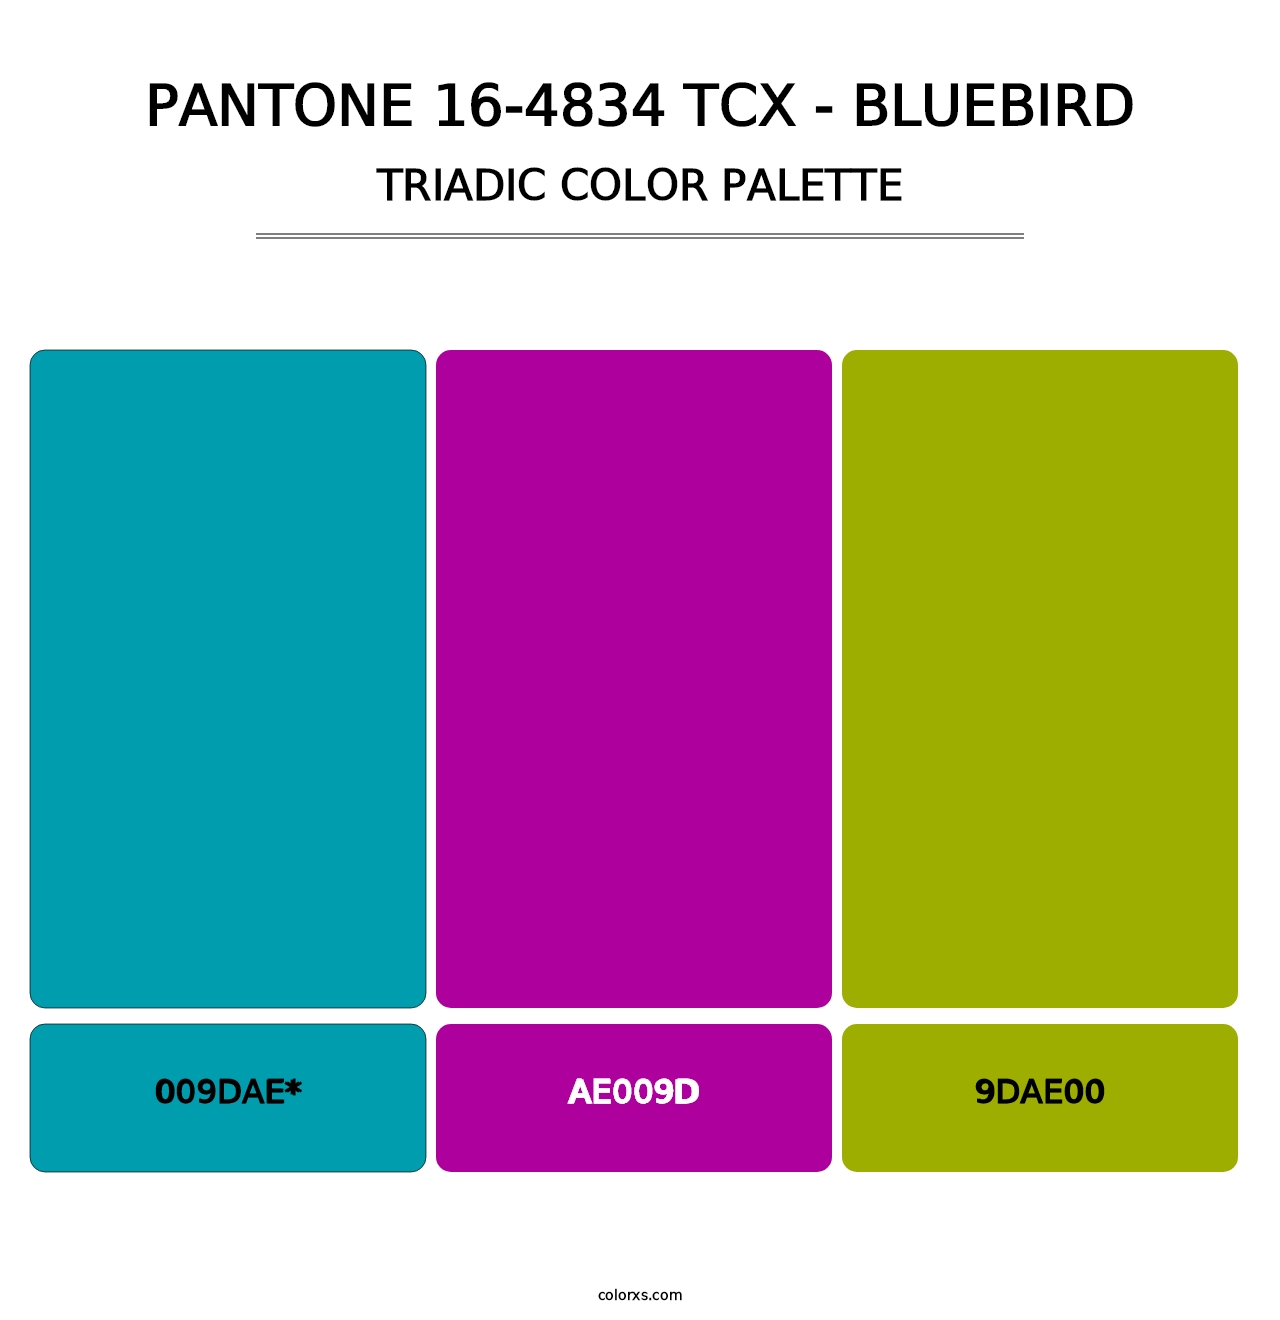 PANTONE 16-4834 TCX - Bluebird - Triadic Color Palette